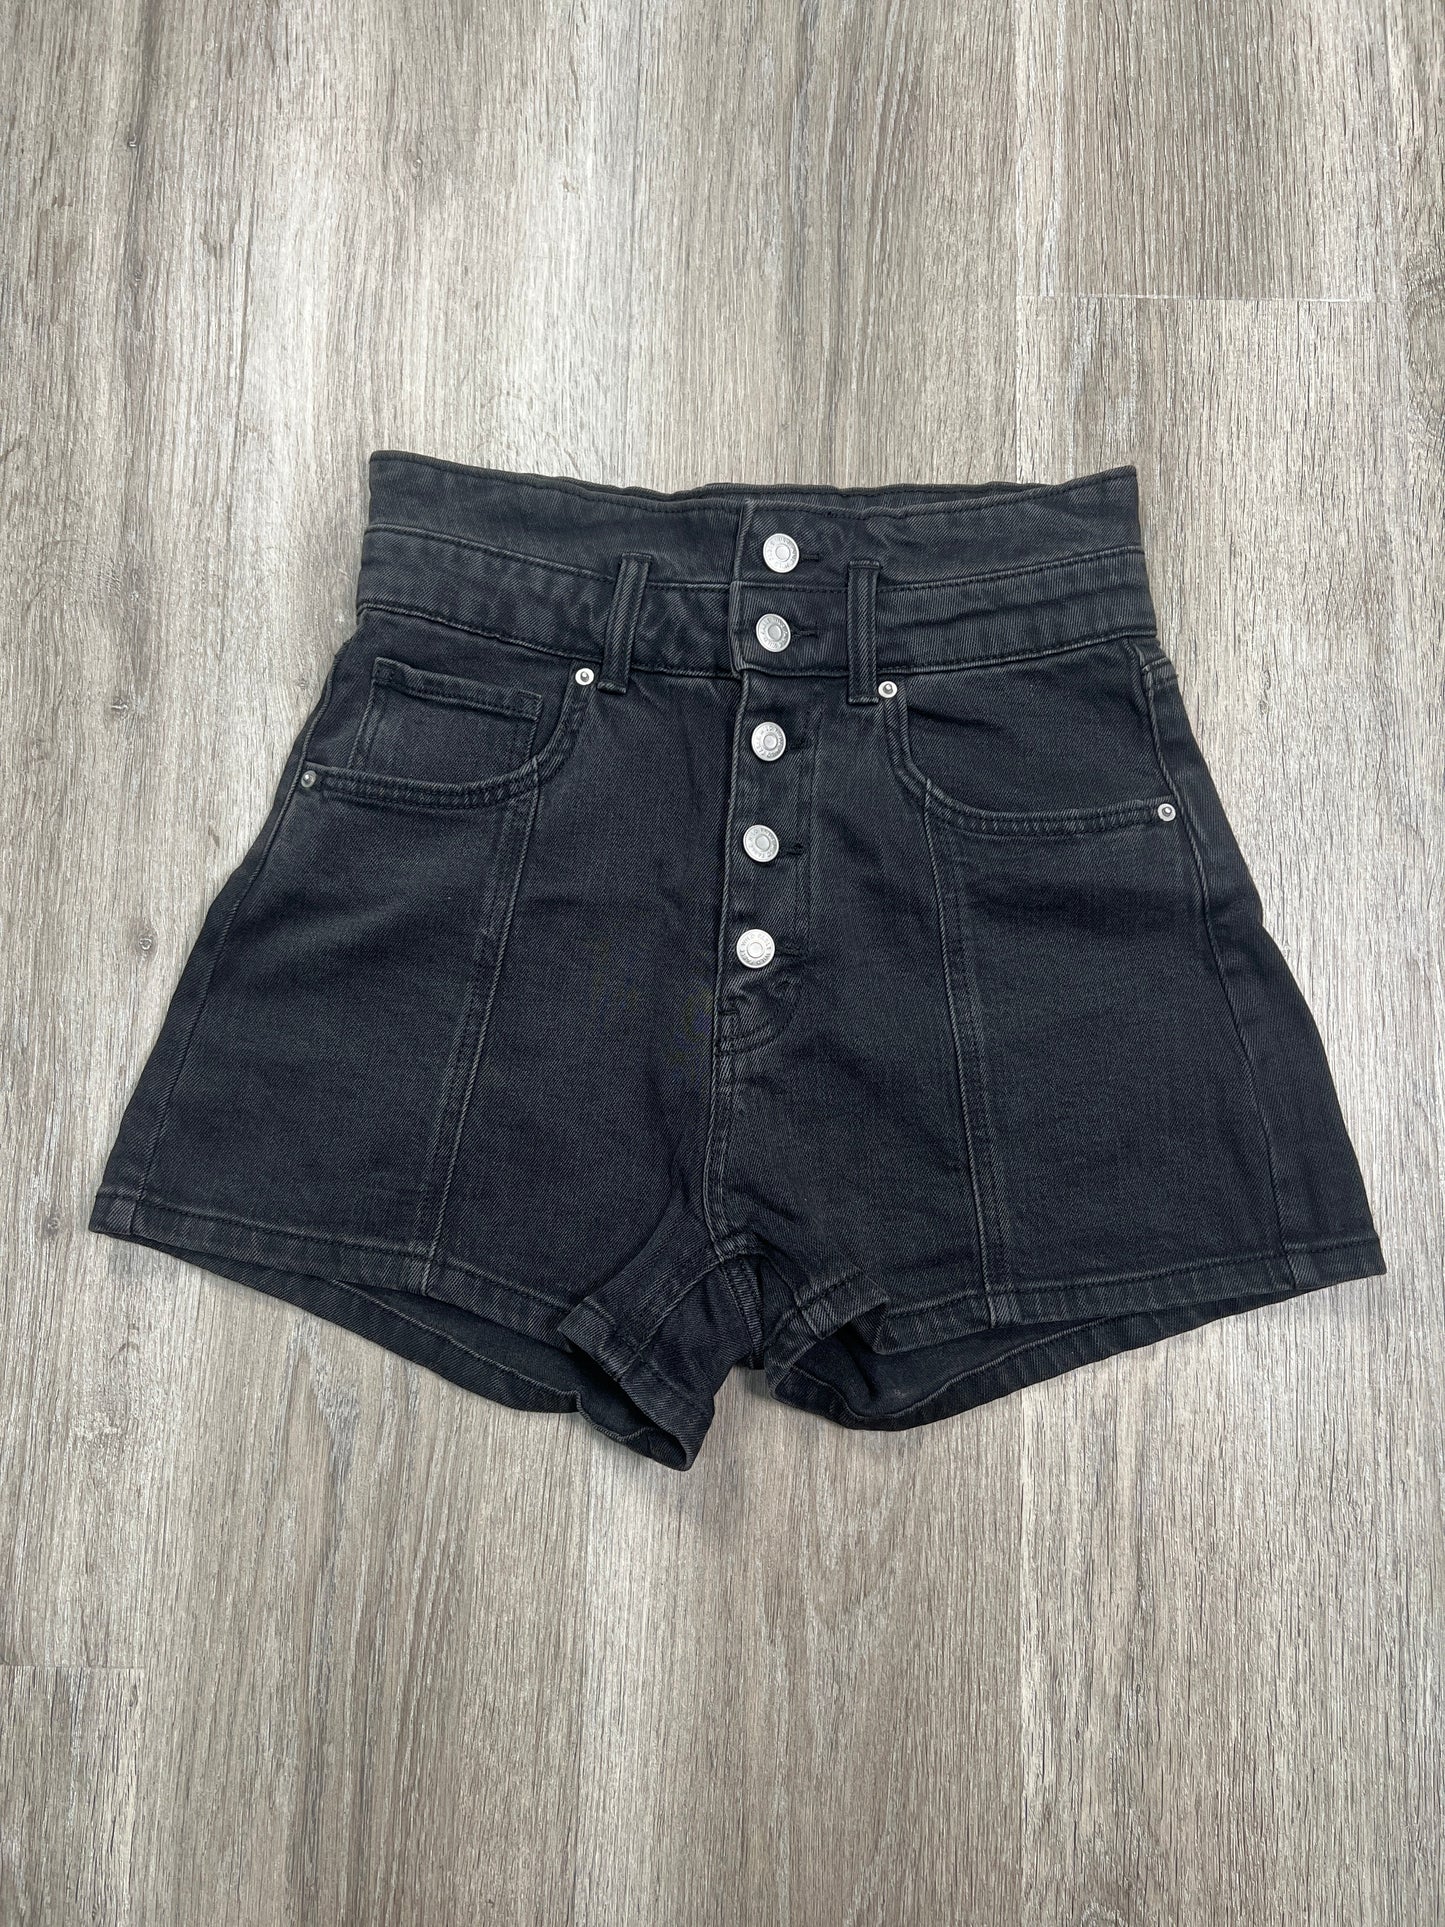 Black Denim Shorts Wild Fable, Size S